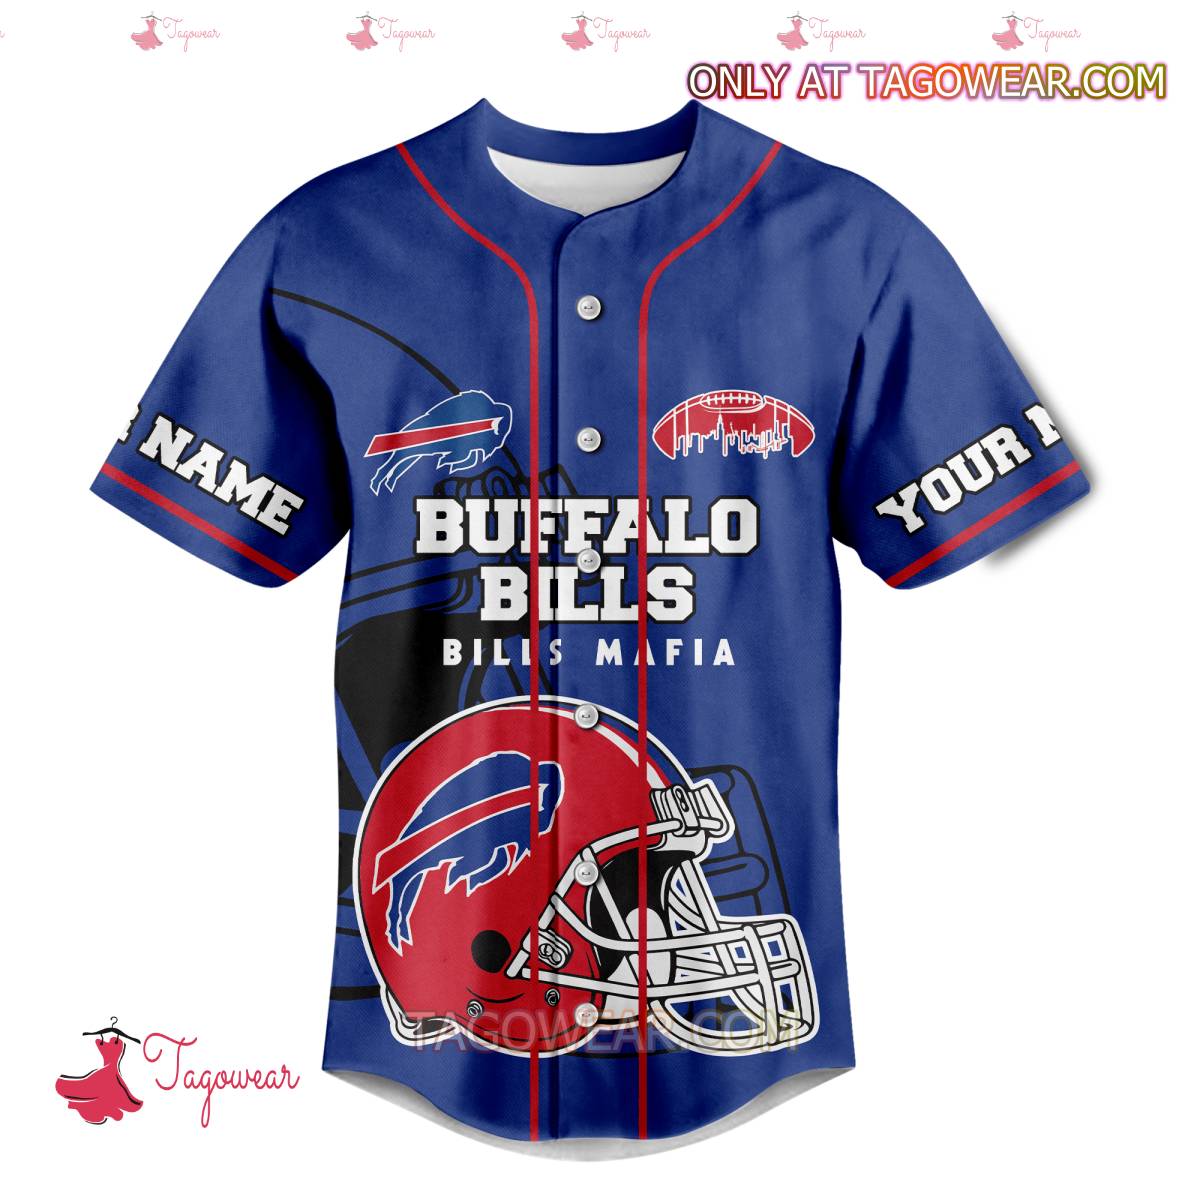 Buffalo Bills Officially The World's Coolest Personalized Baseball Jersey a